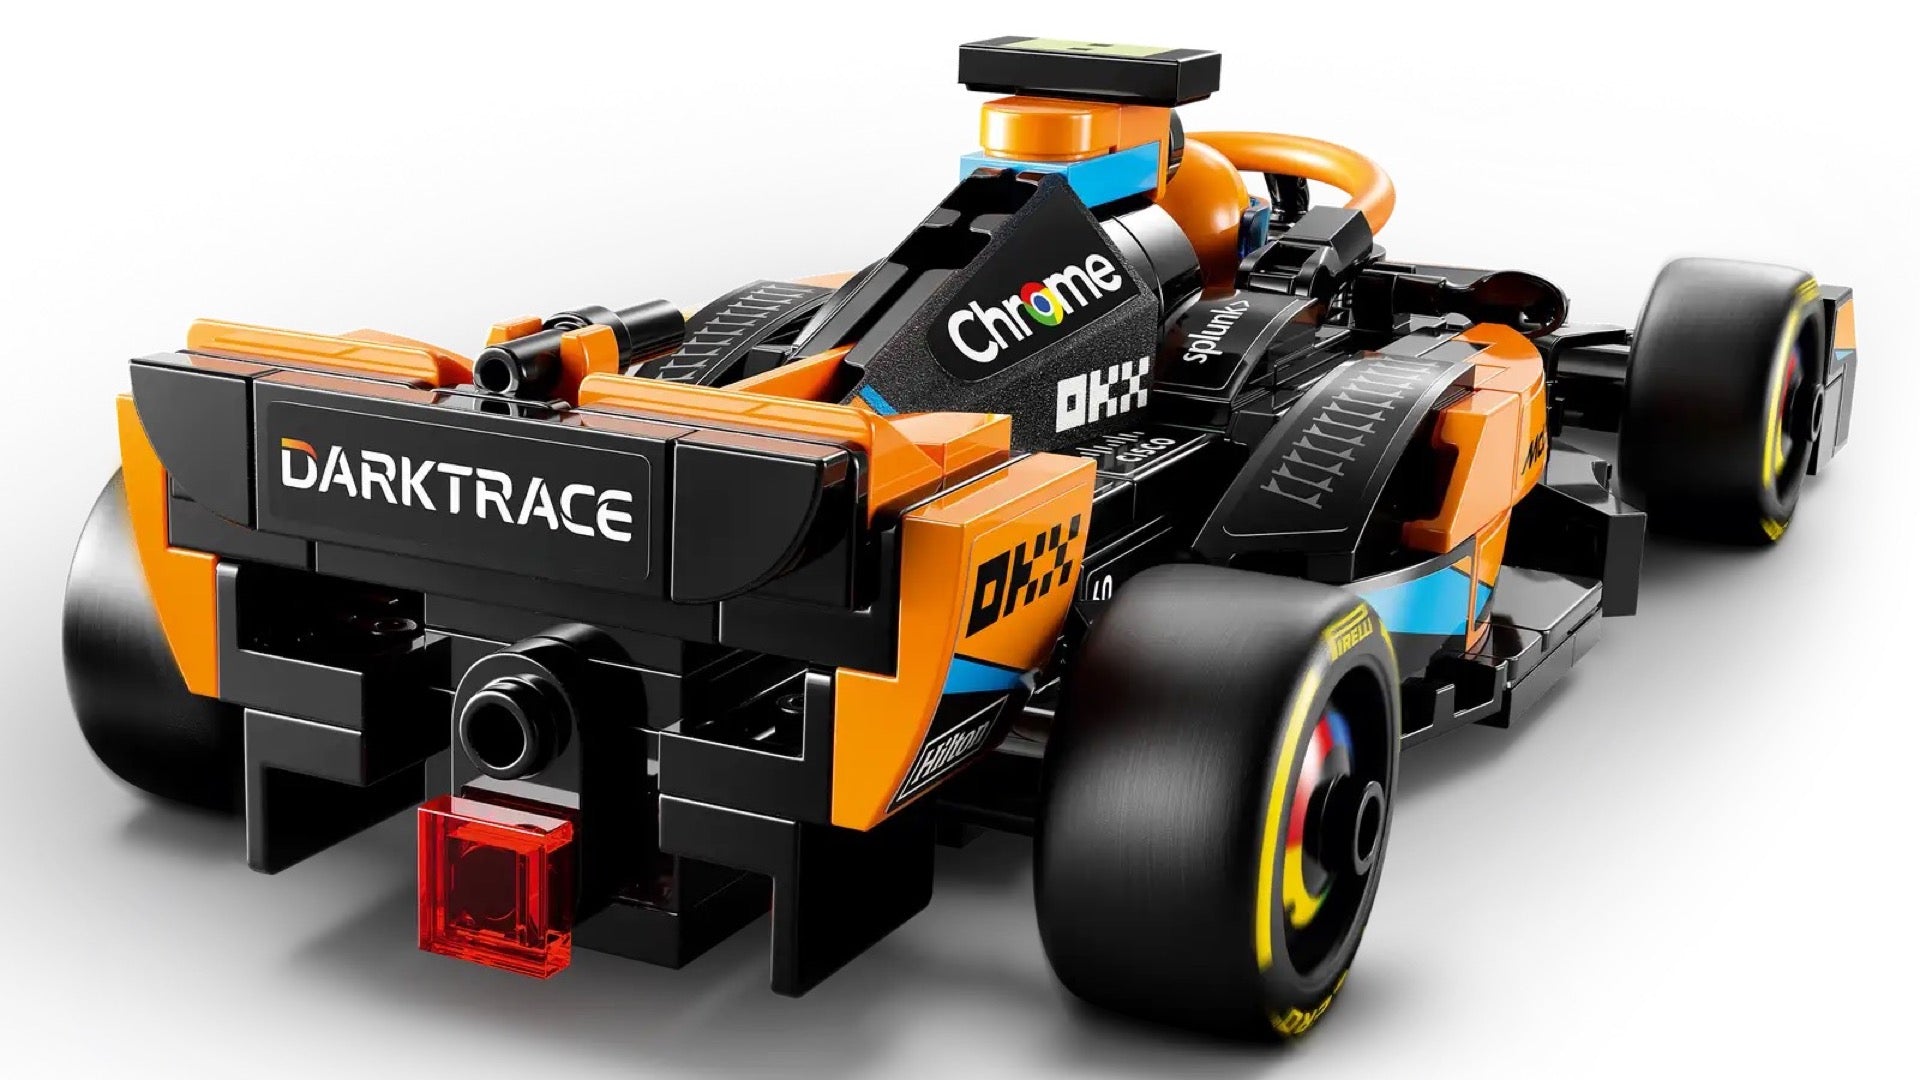 76919 LEGO Speed Champions Monoposto da corsa McLaren Formula 1